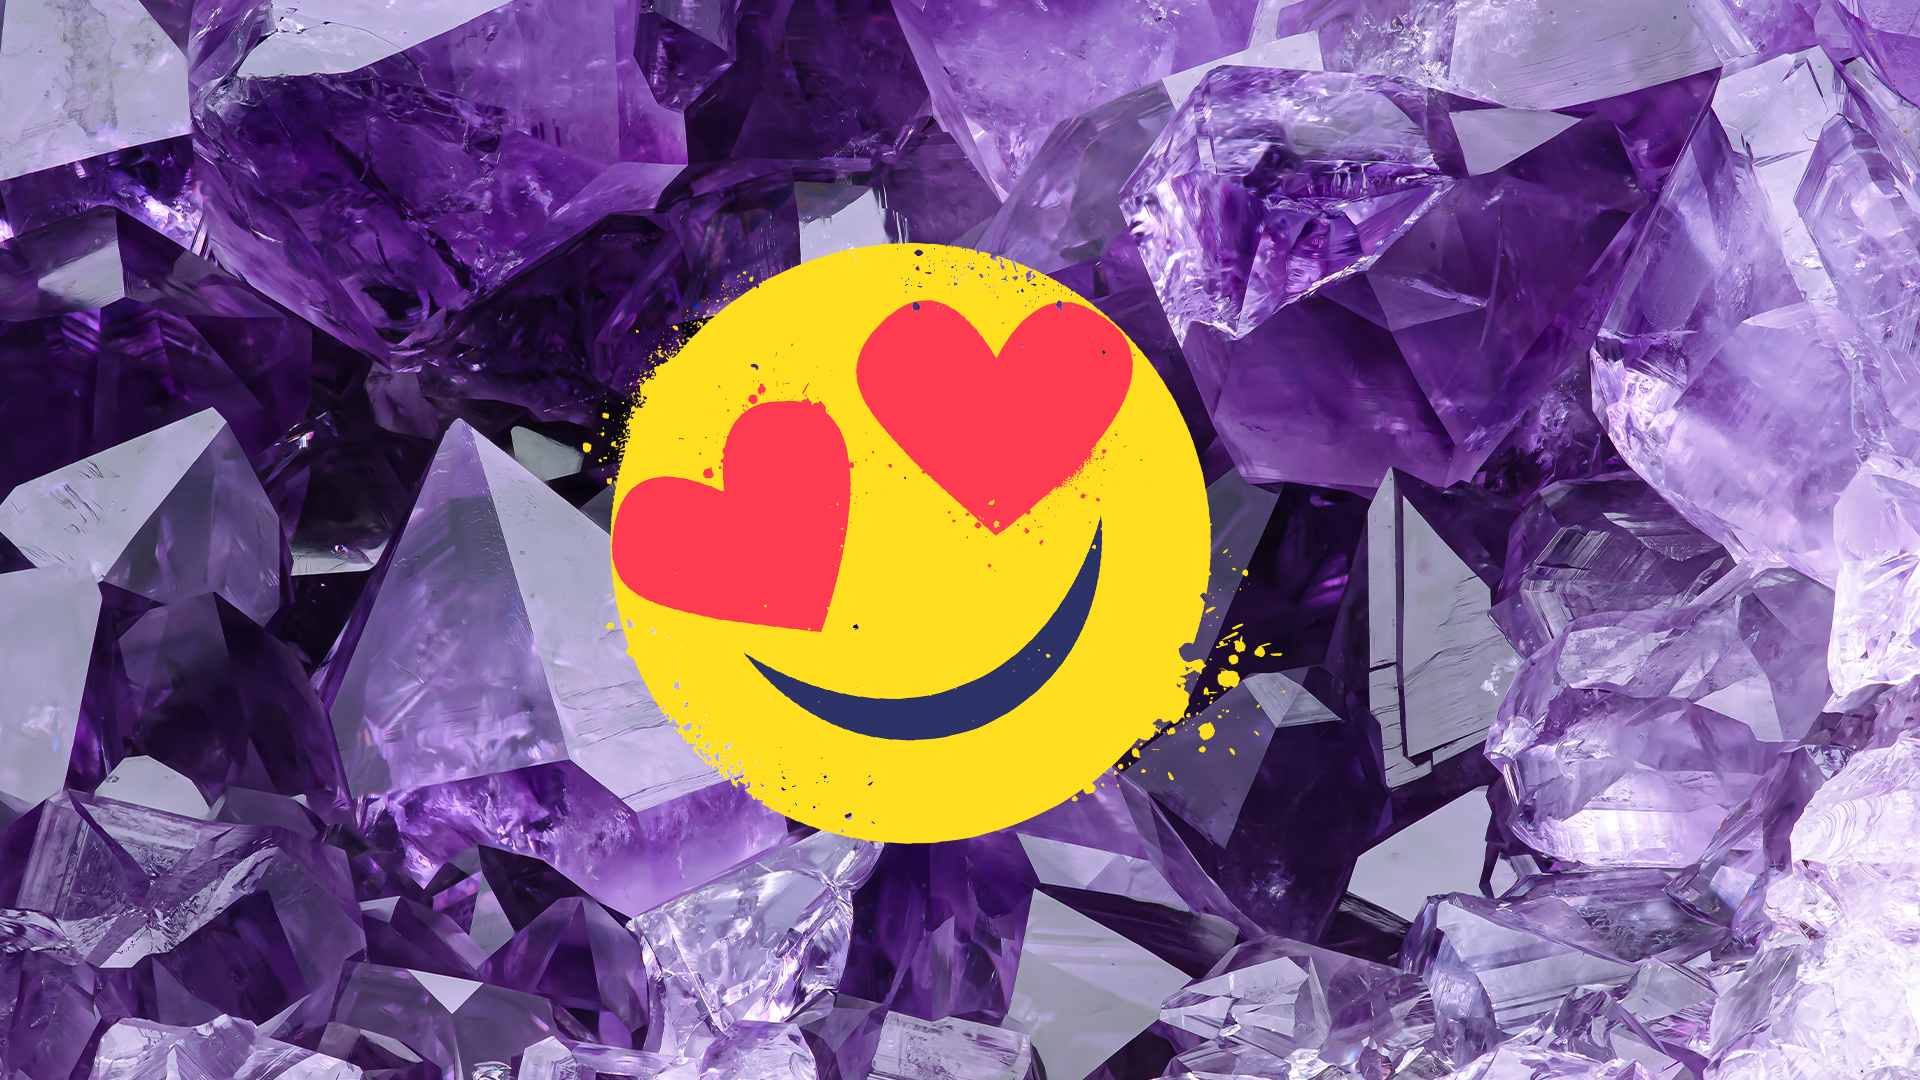 Crystals and heart eyed emojis